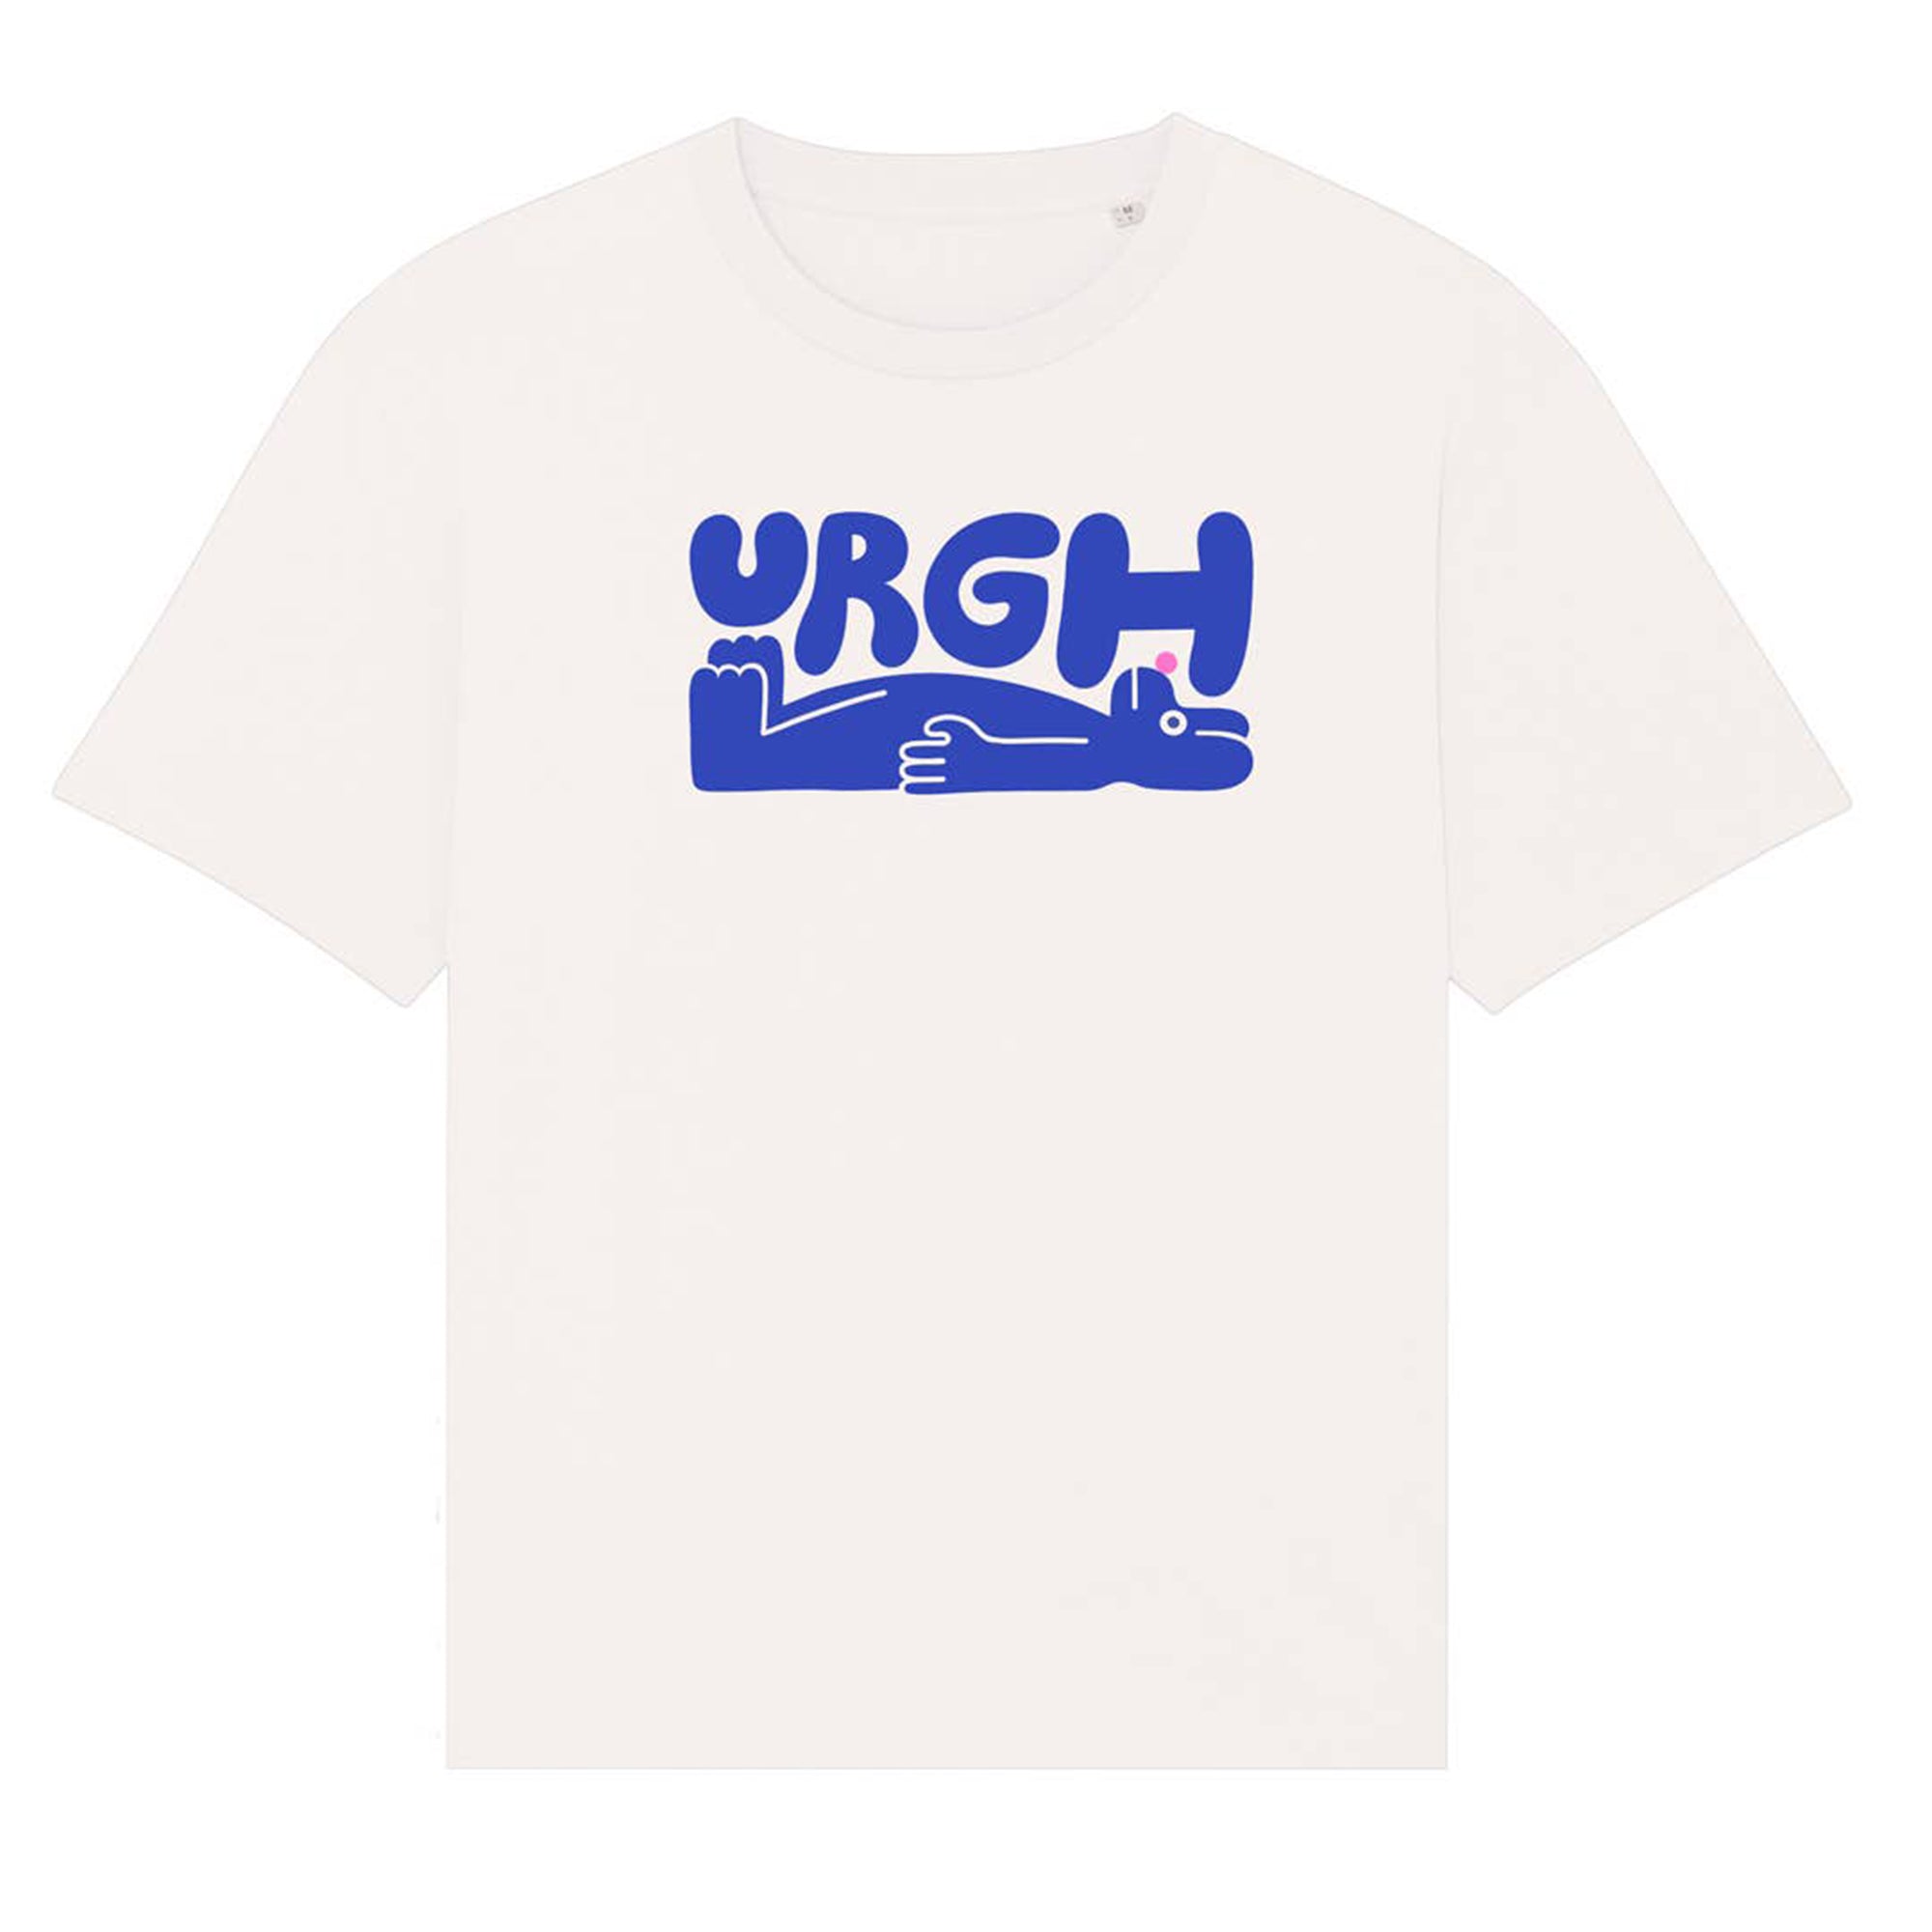 Urgh adult t-shirt